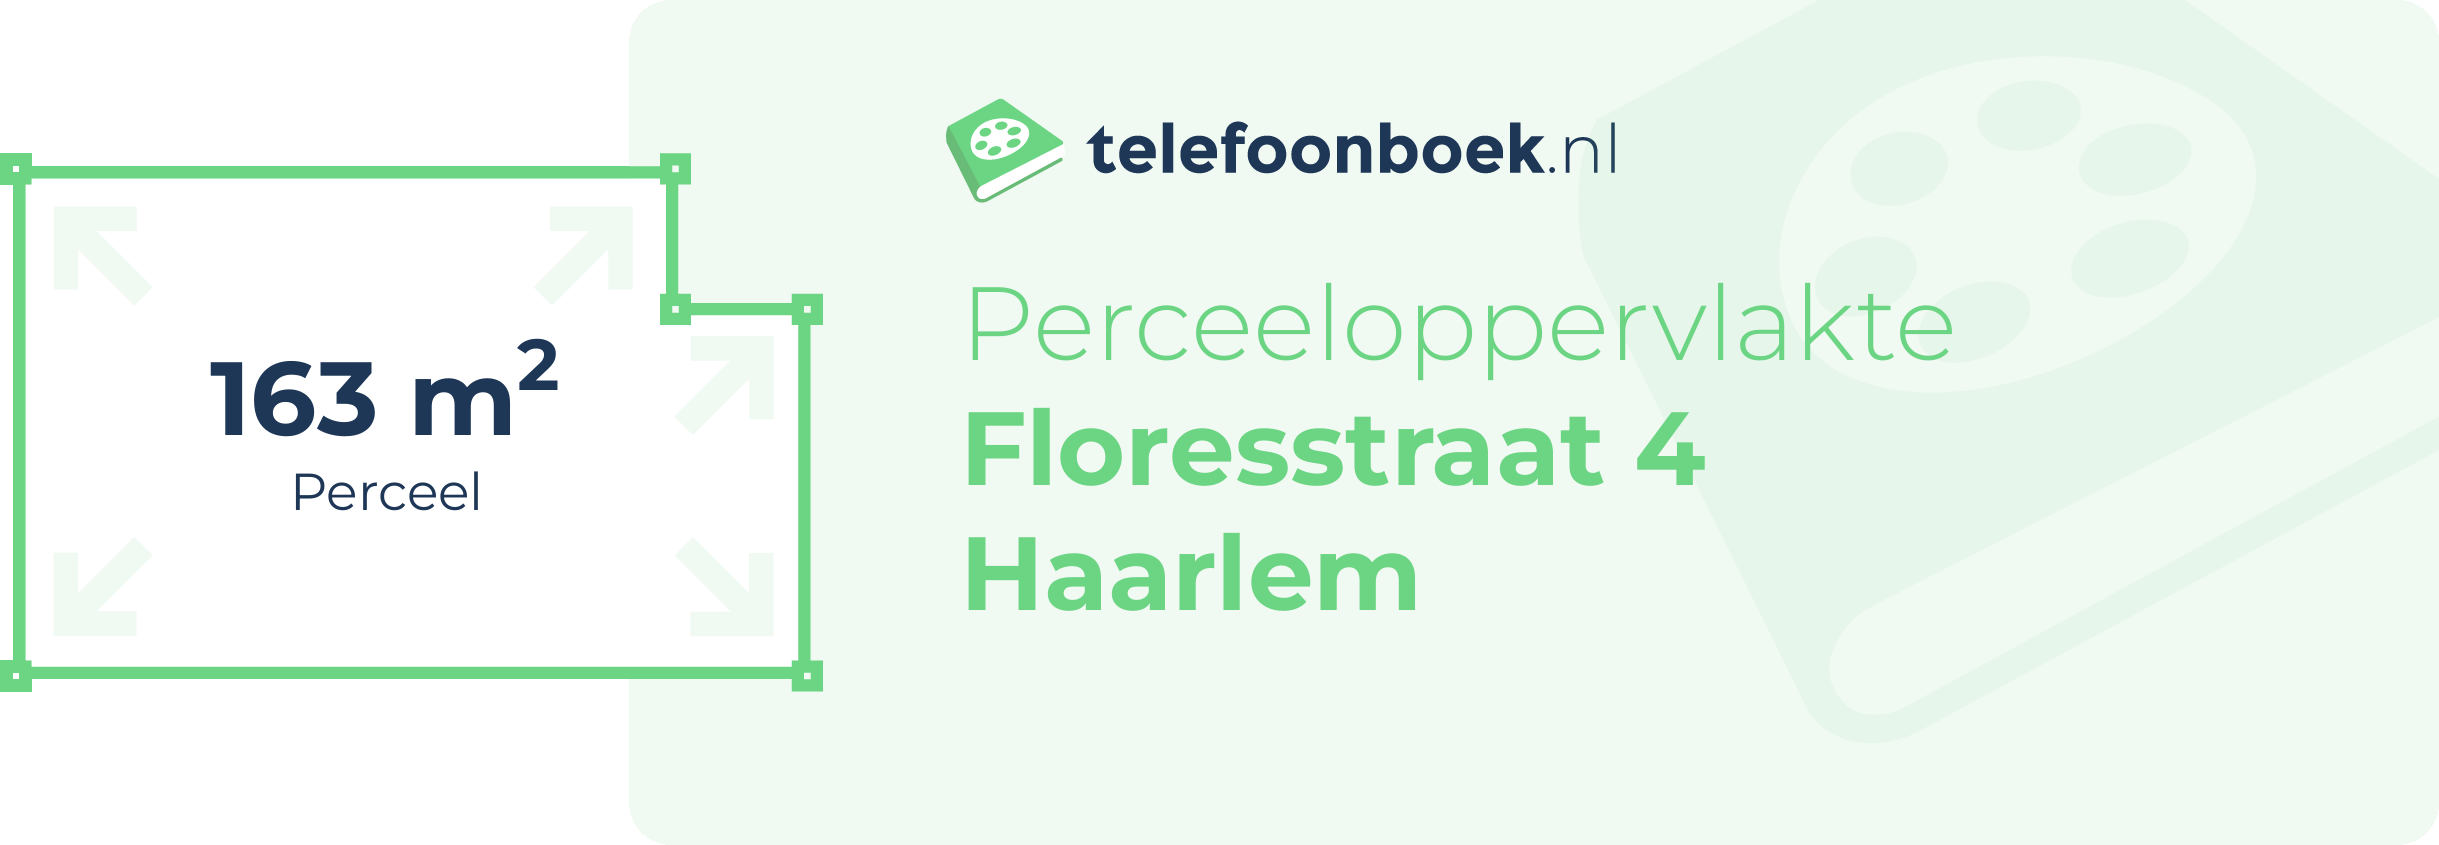 Perceeloppervlakte Floresstraat 4 Haarlem